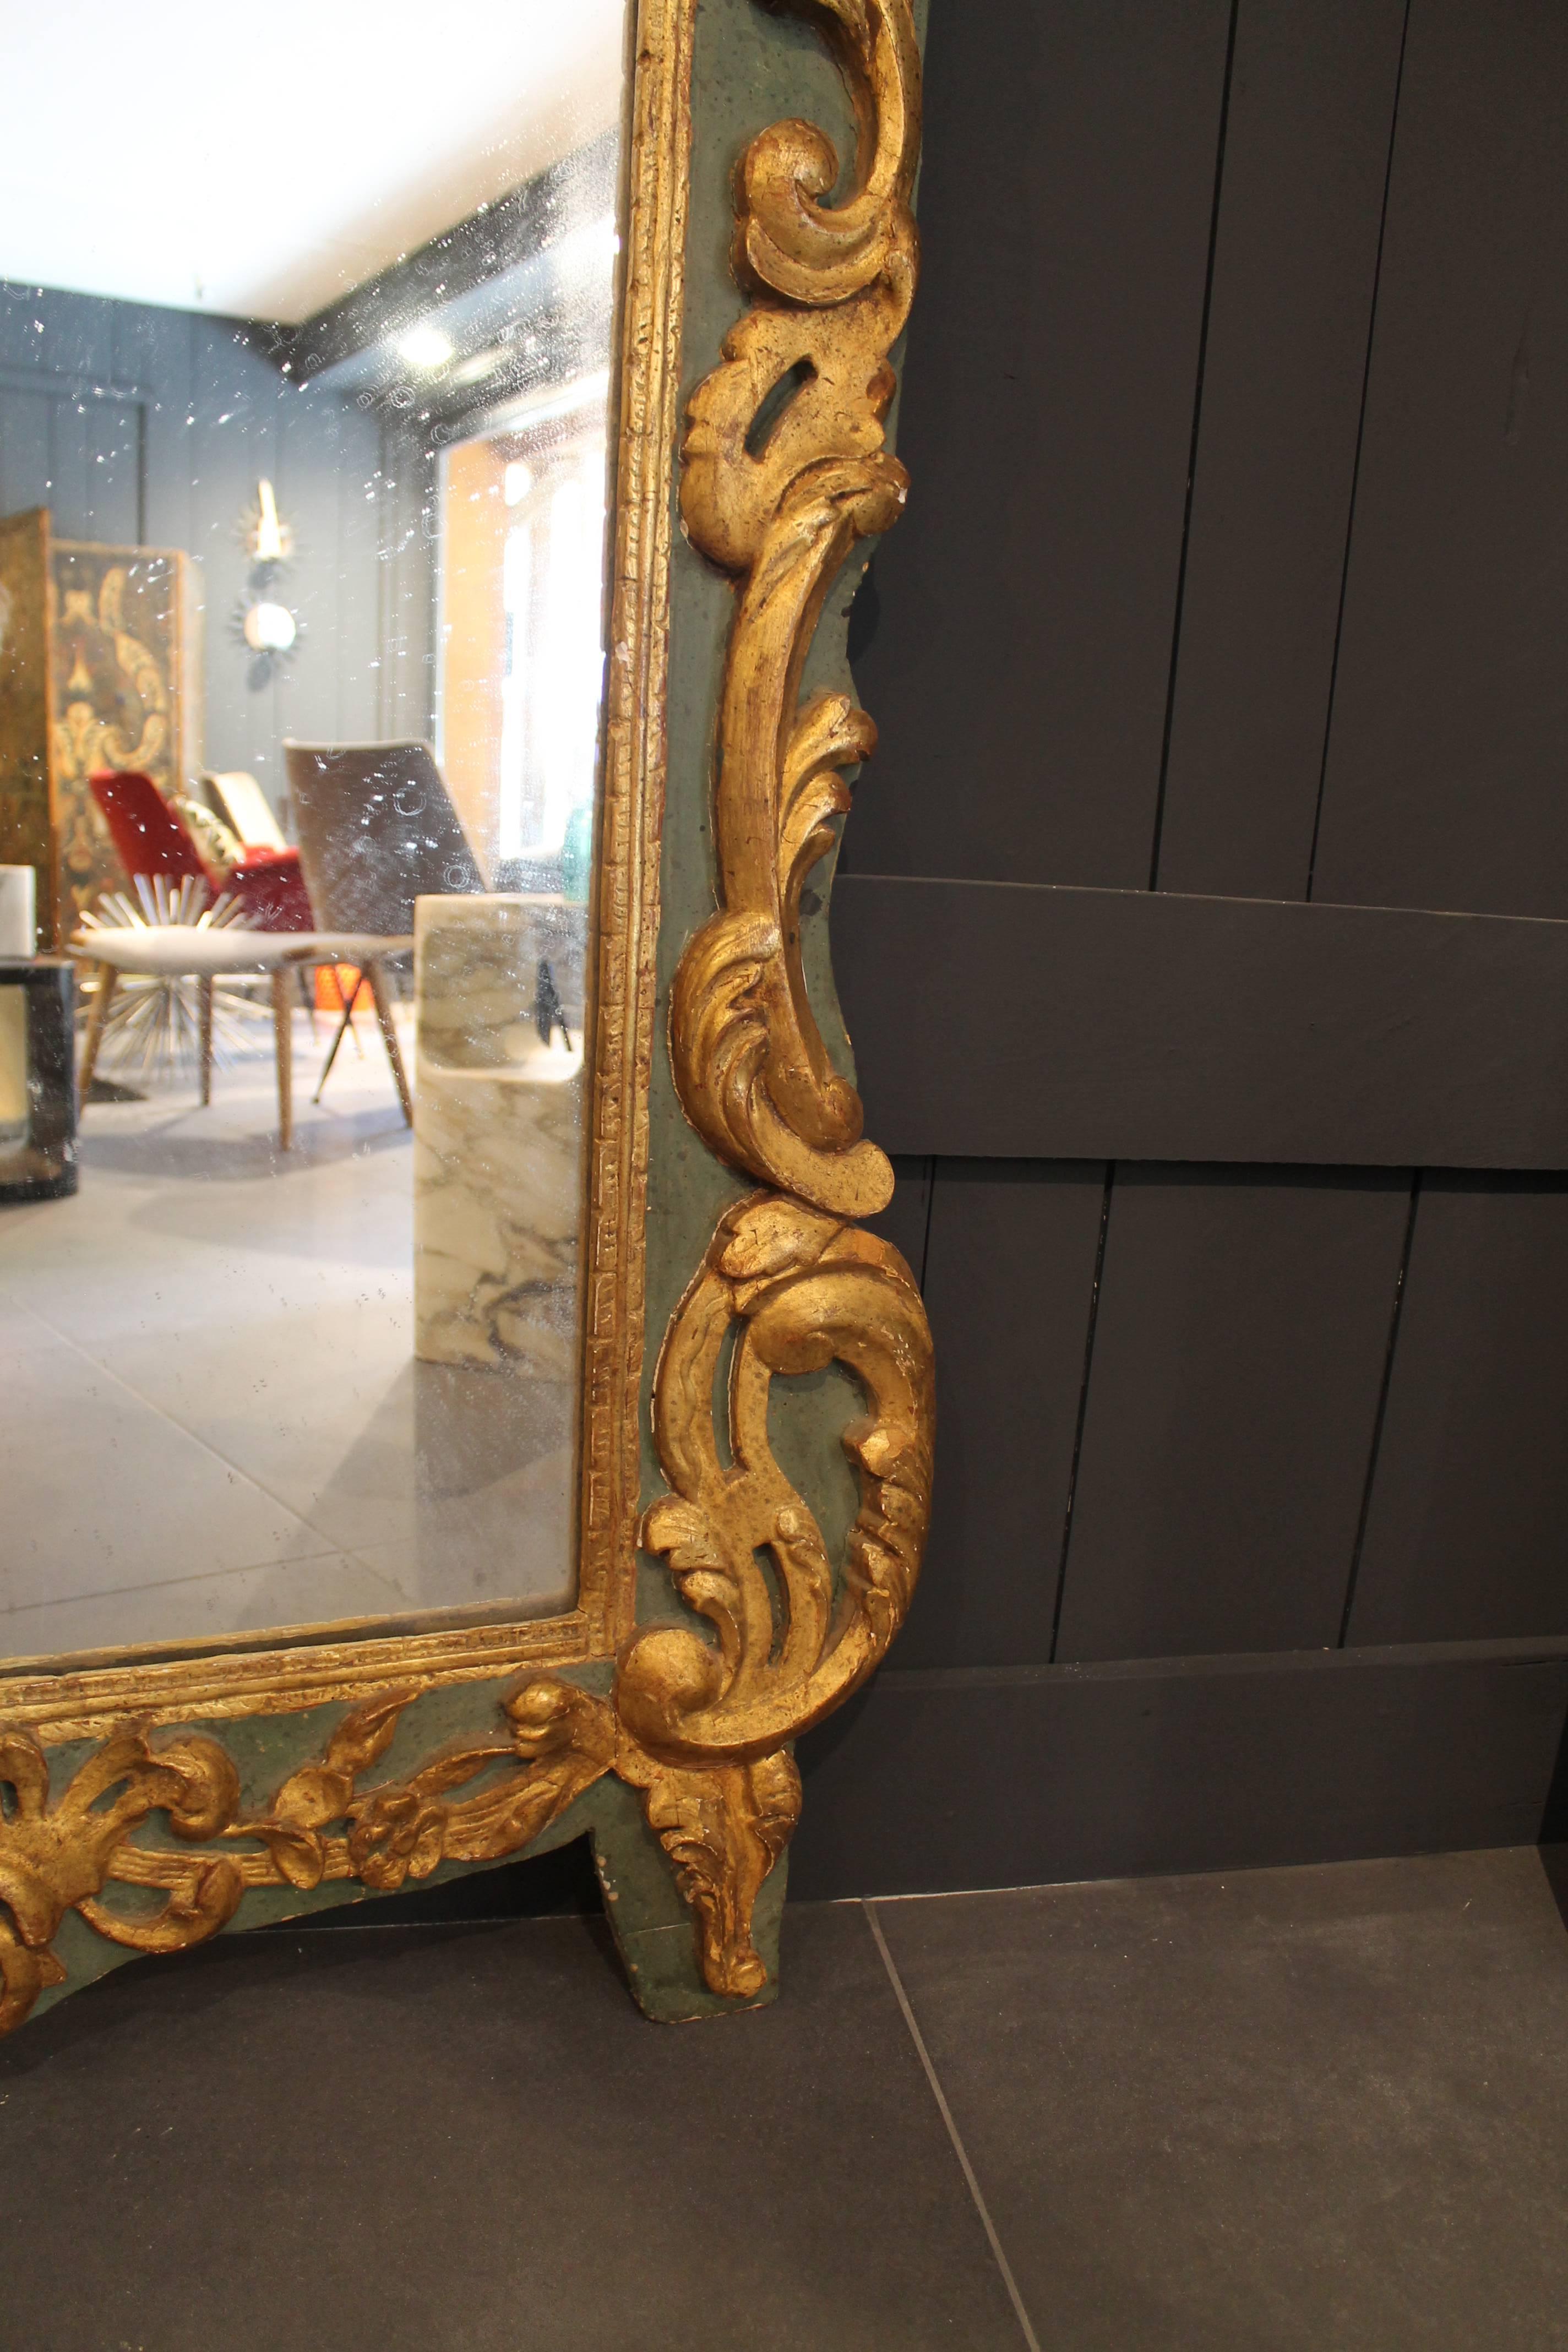 18th Century Louis XVI Mirror For Sale